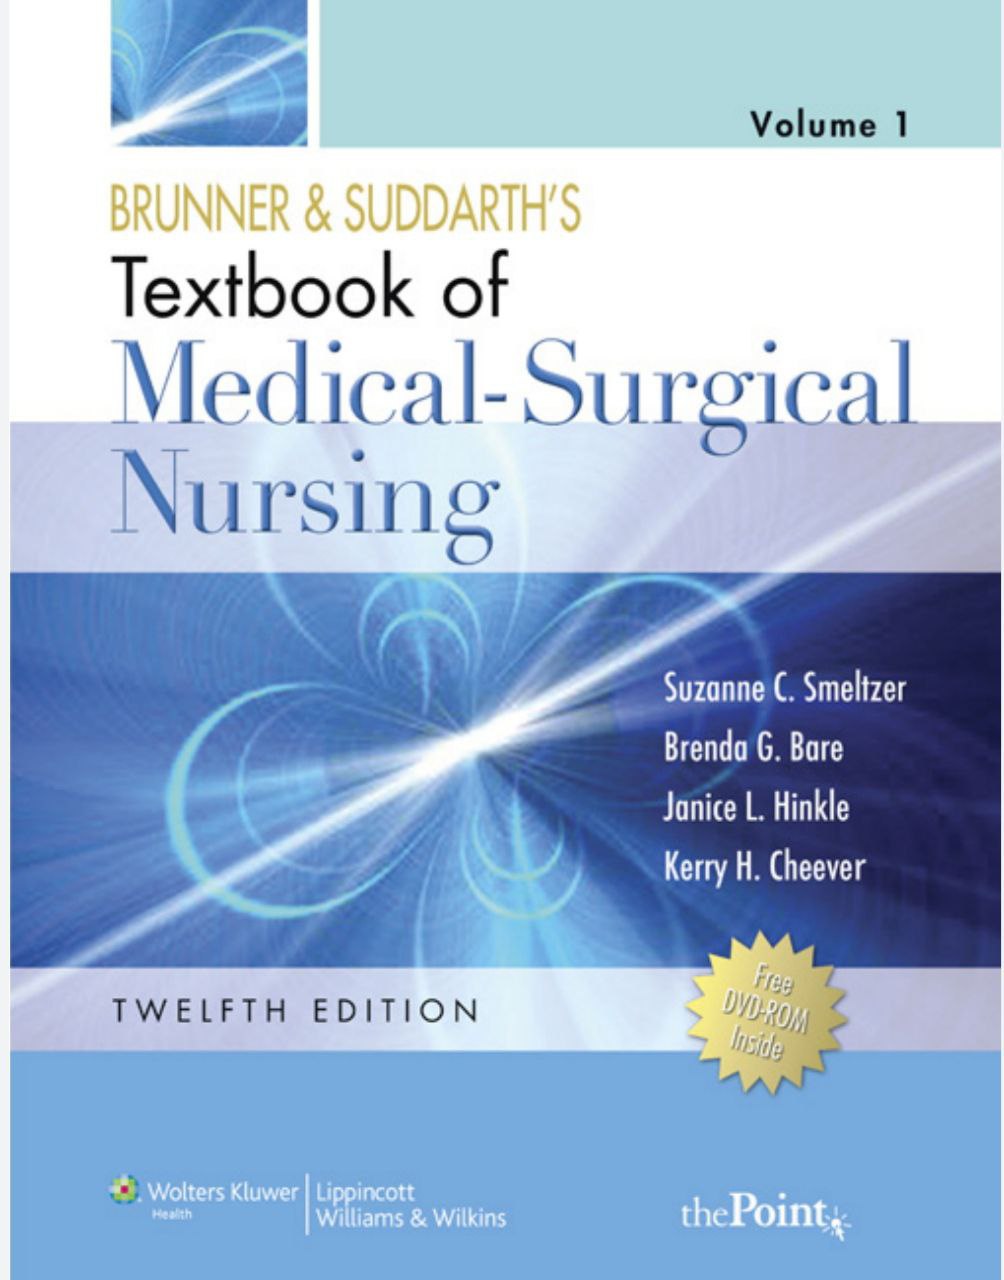 Textbook of Medical -Surgical Nursing